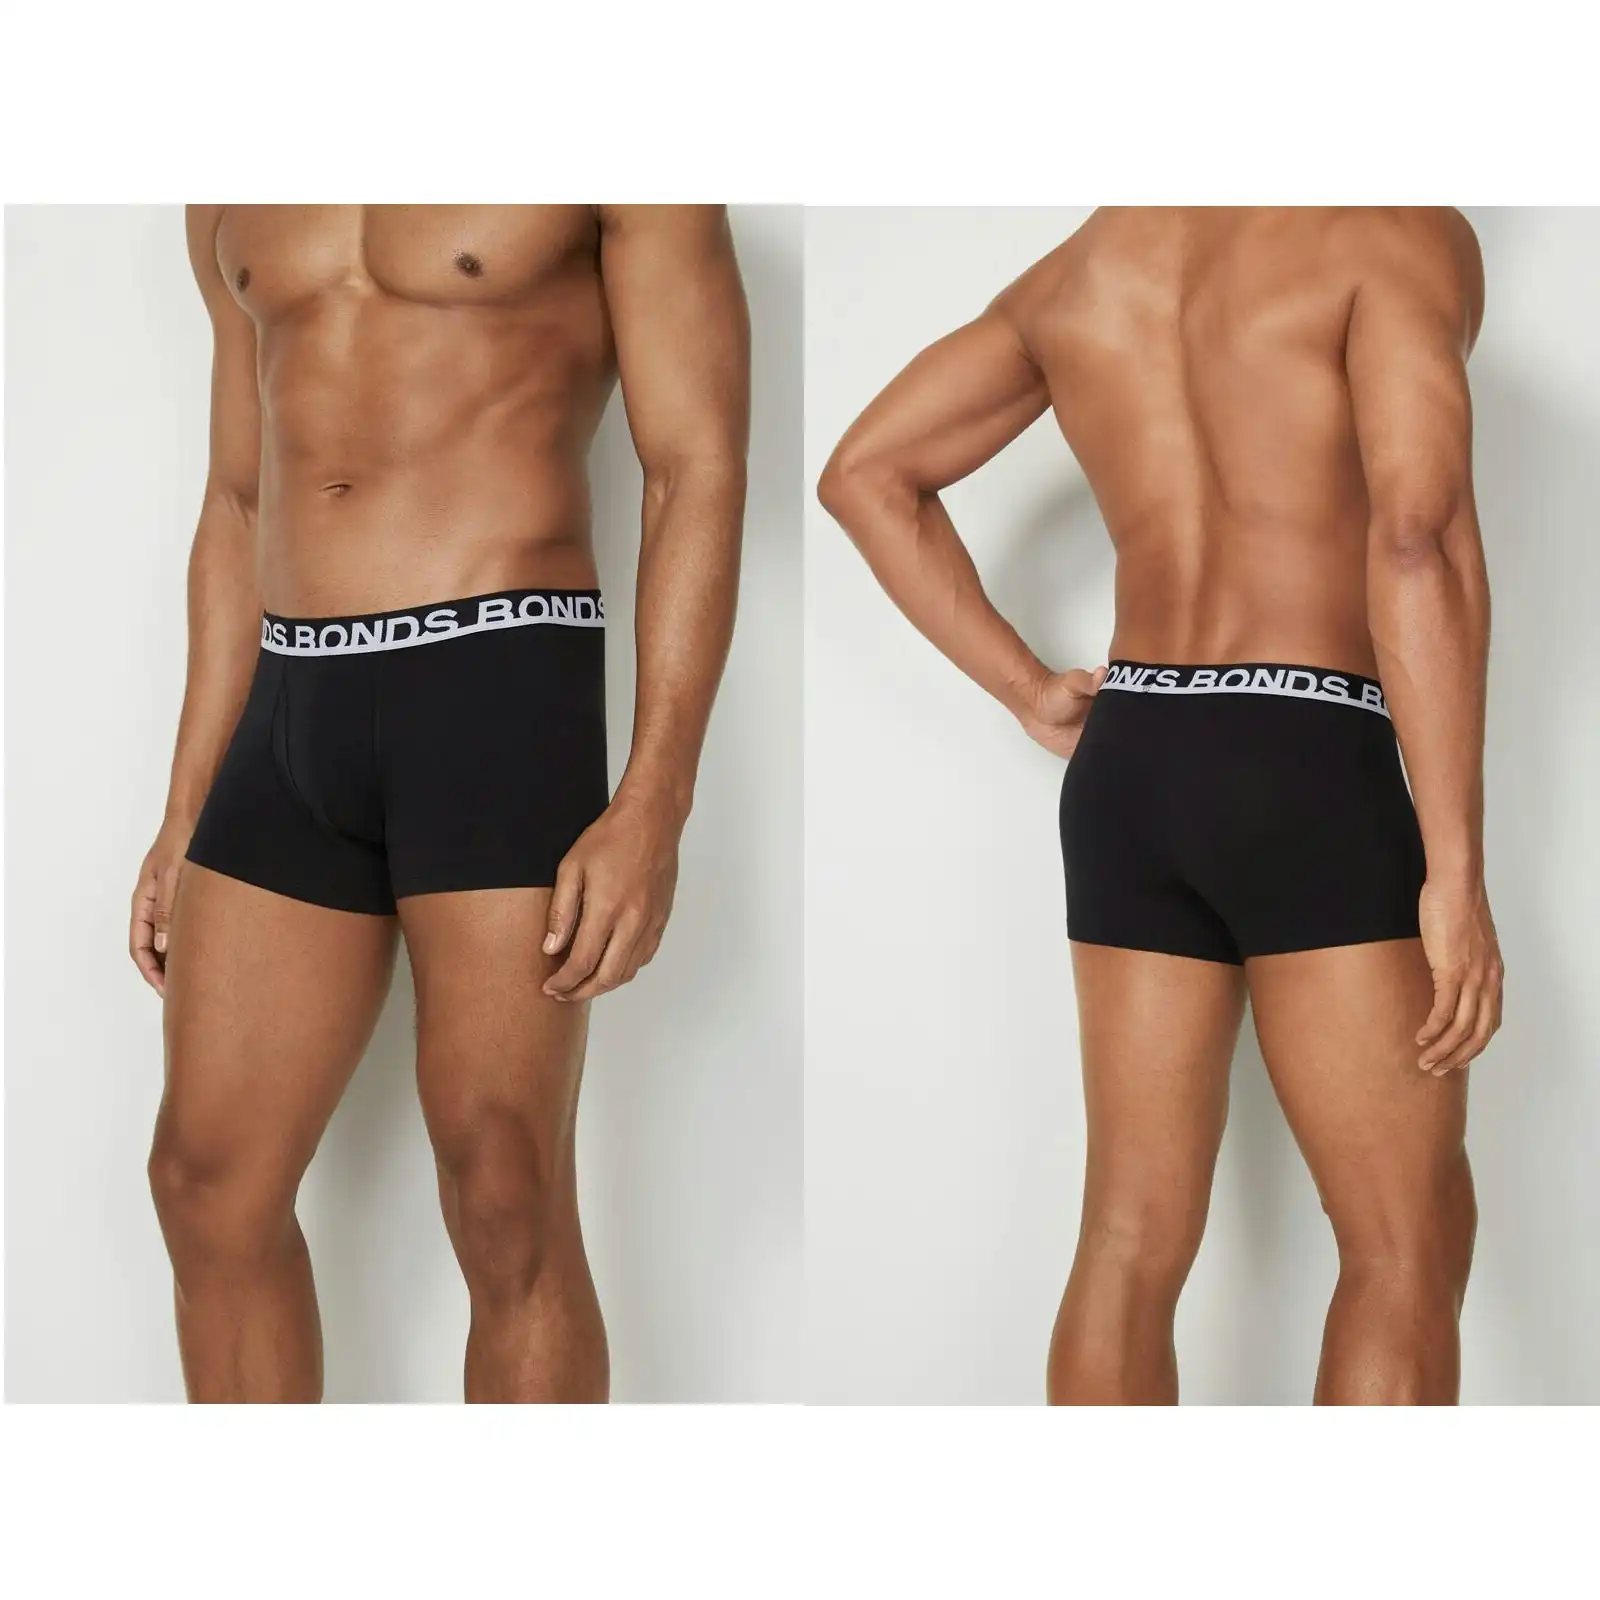 2 x Bonds Everyday Trunks - Mens Underwear Black Shorts Boxers Briefs Jocks